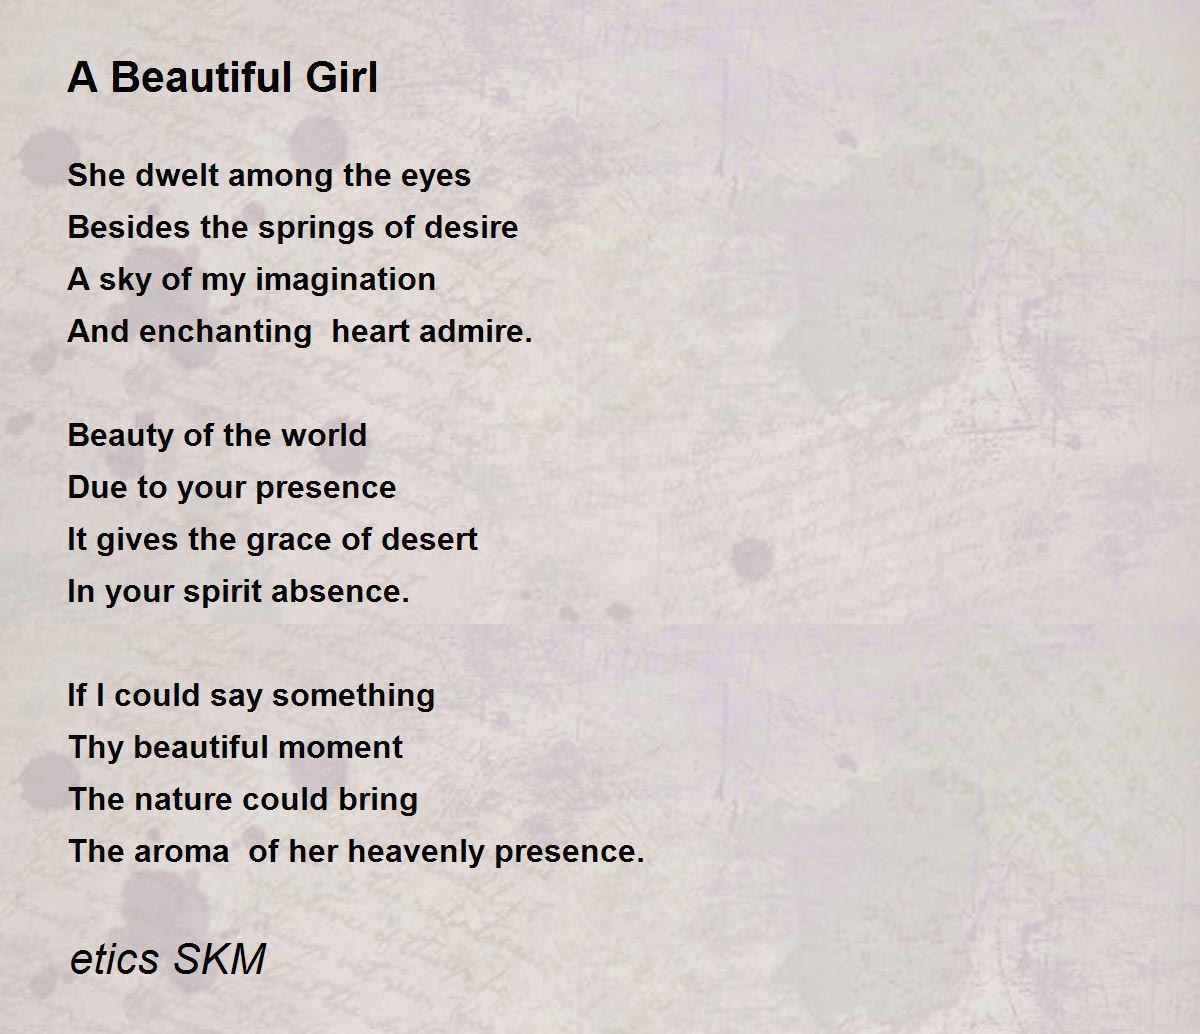 A Beautiful Girl Poem By Etics Skm